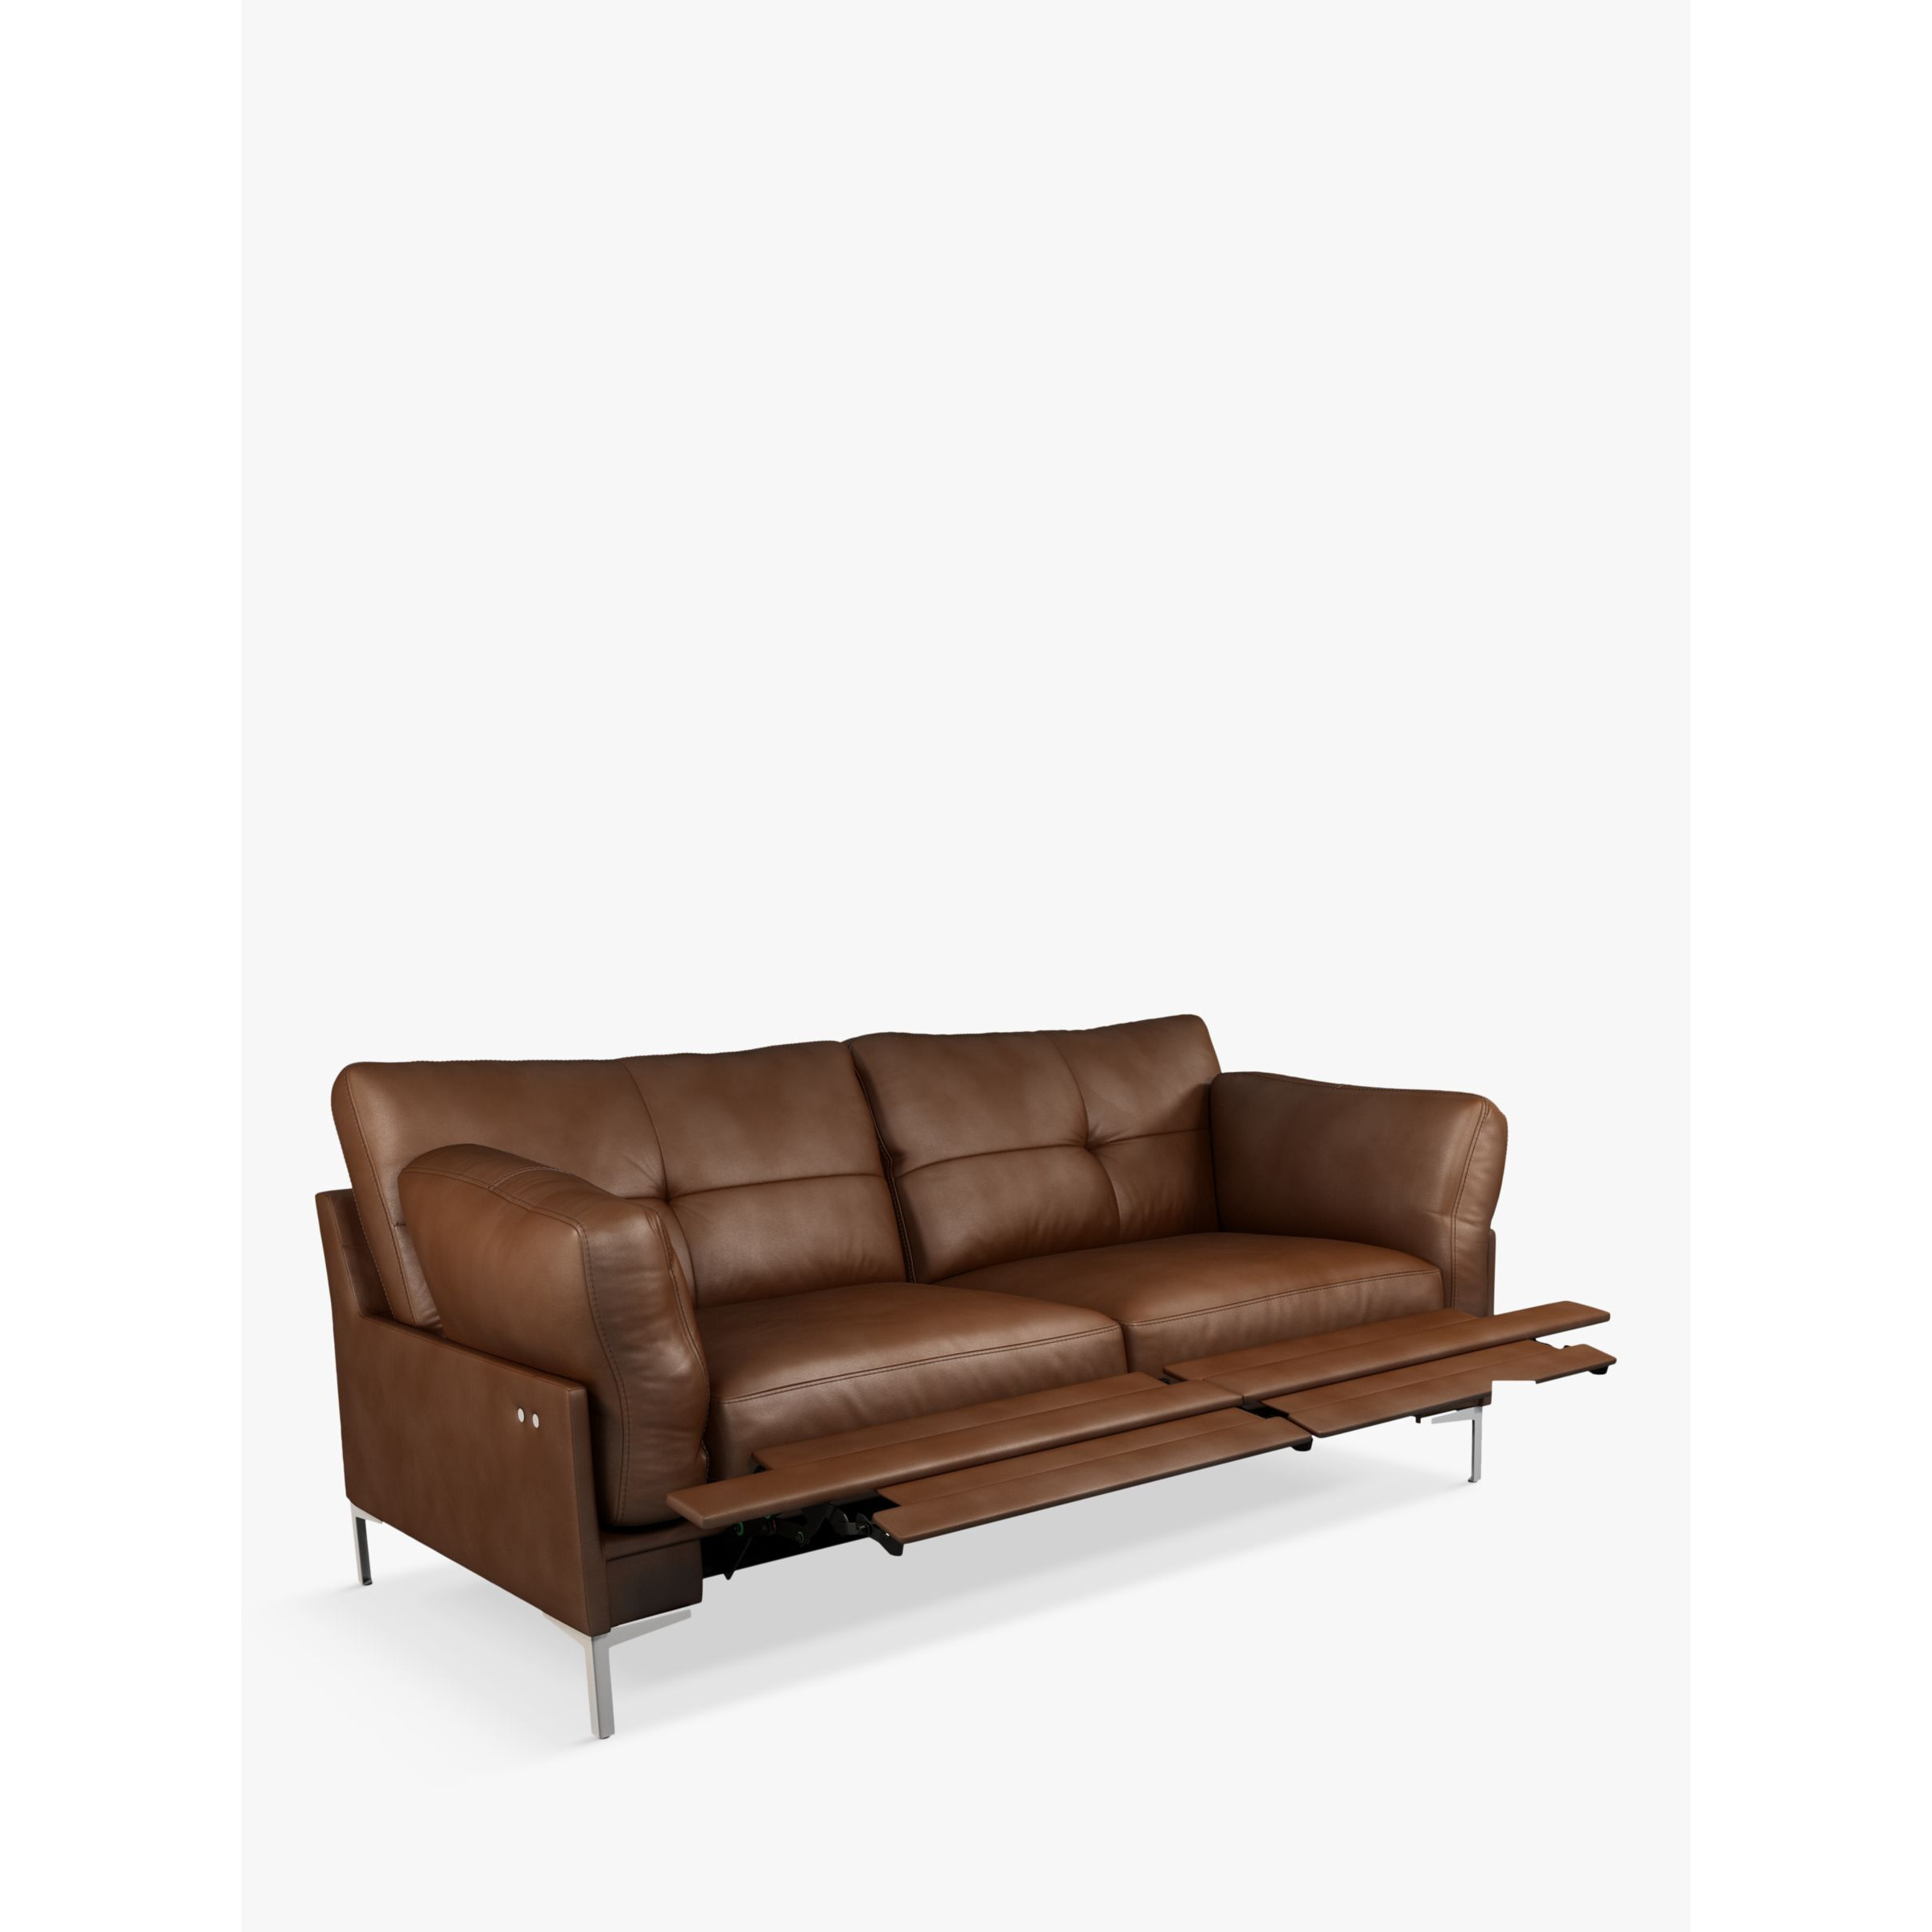 John Lewis Java II Motion Medium 2 Seater Leather Sofa with Footrest Mechanism, Metal Leg - image 1